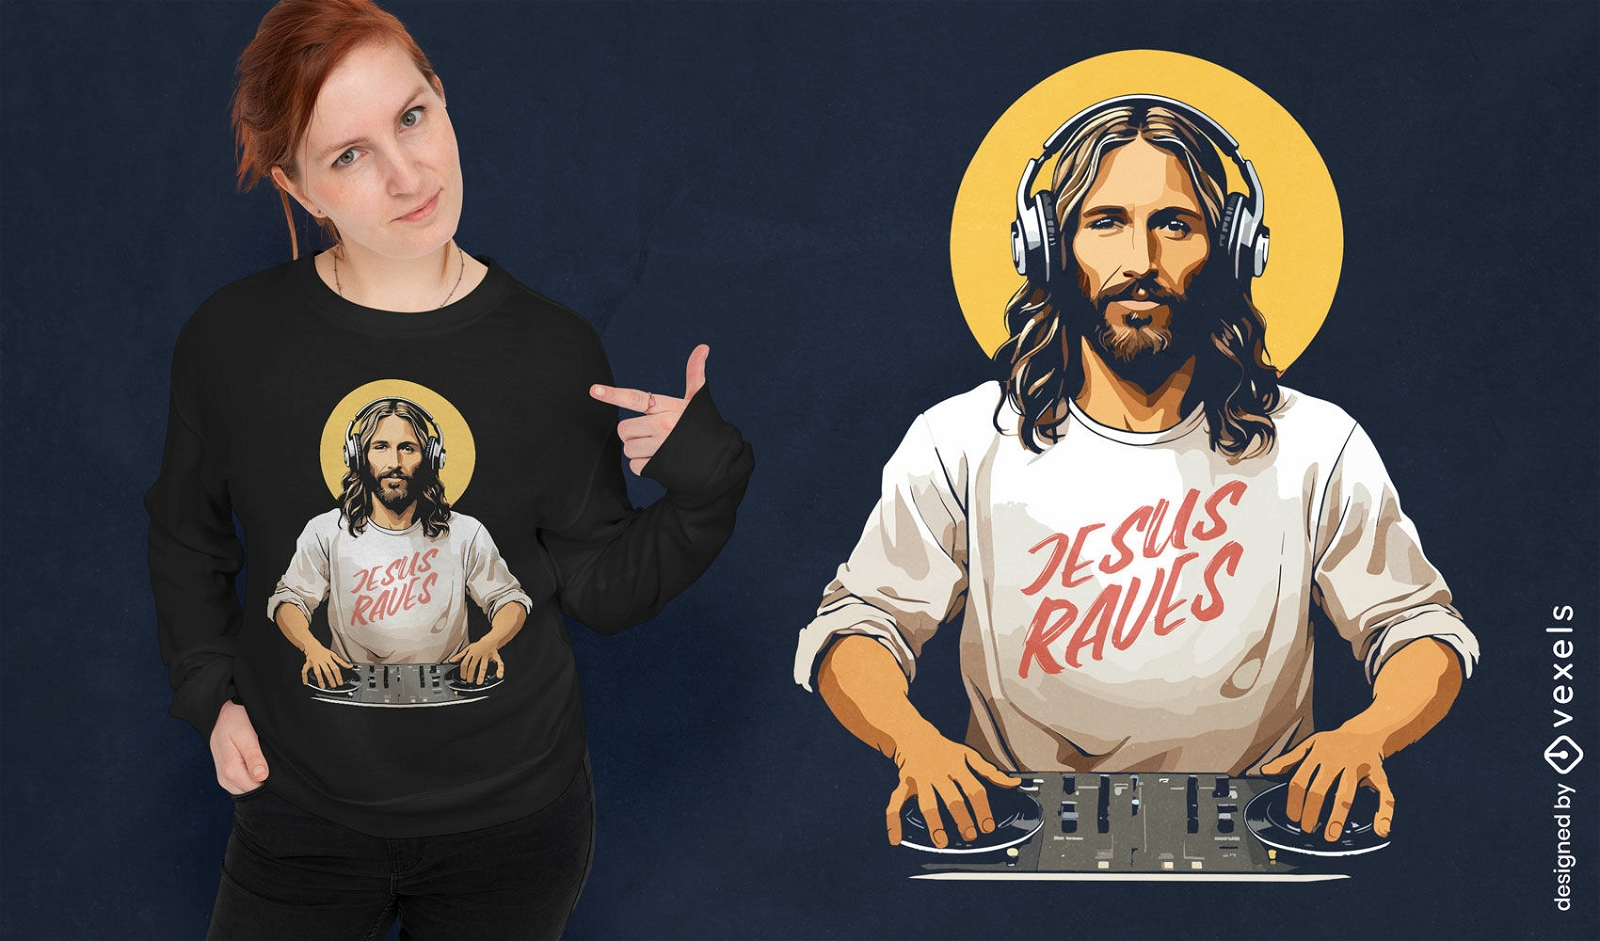 DJ Jesus raves t-shirt design